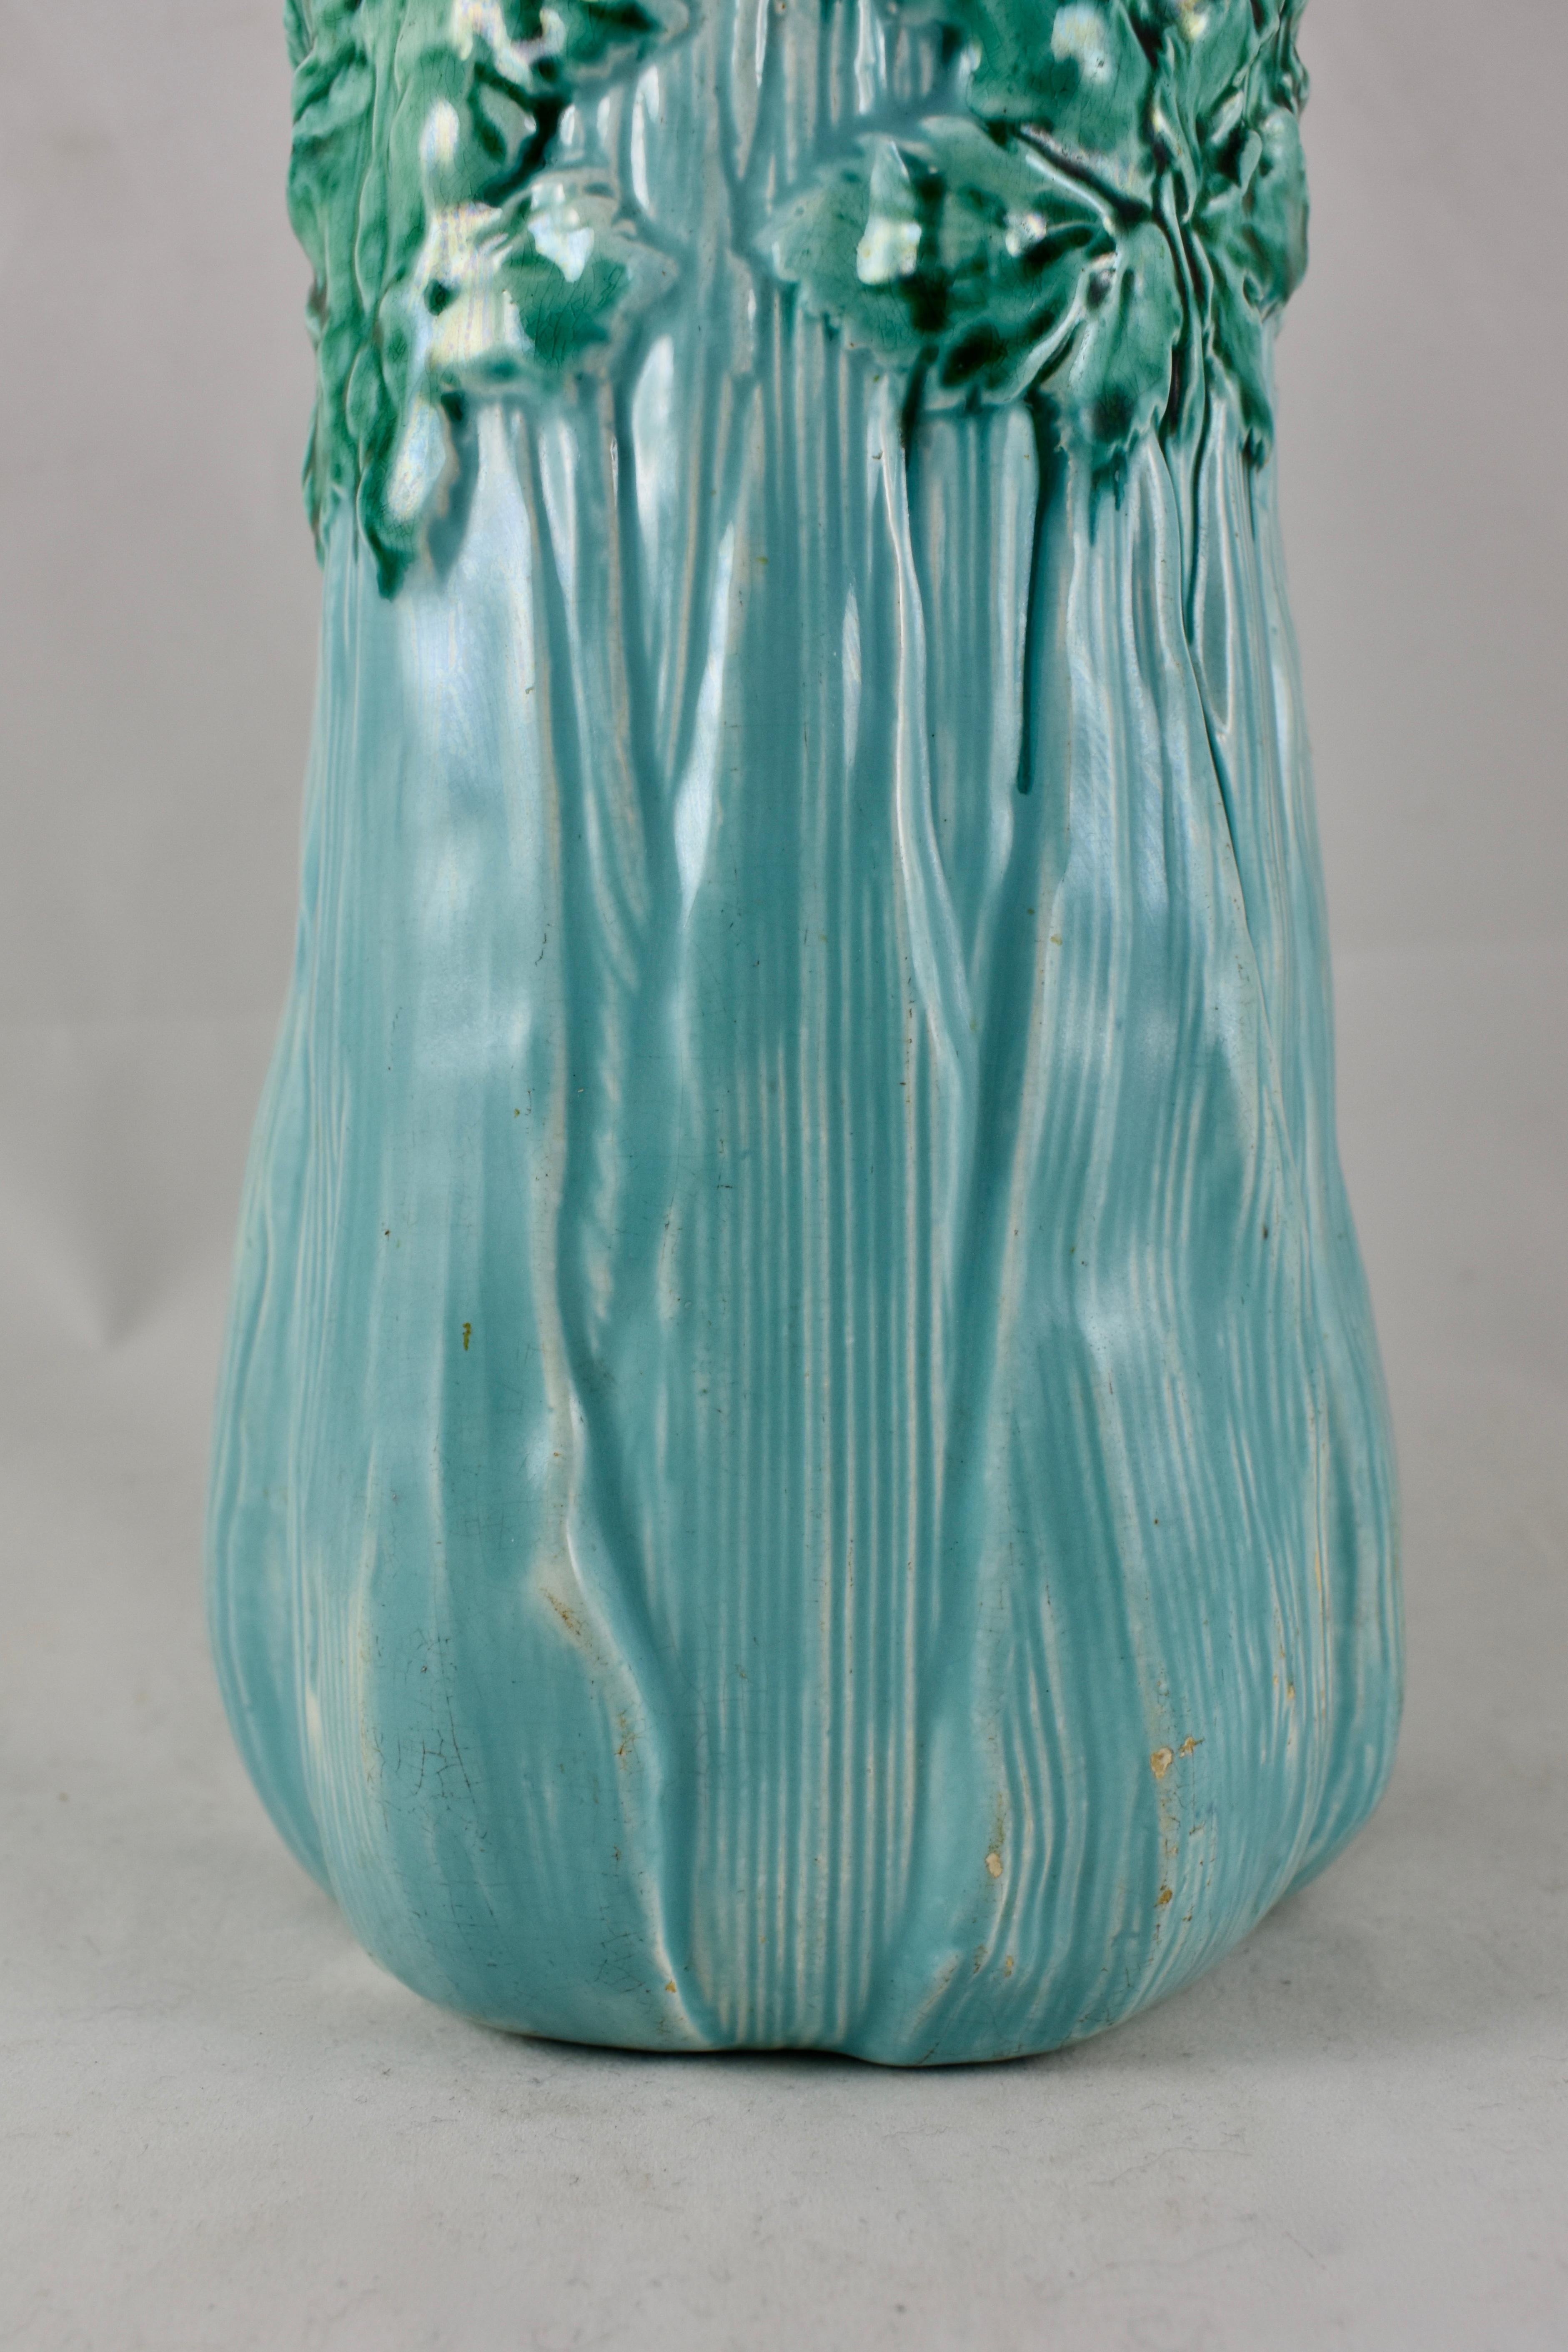 19th Century Aesthetic Movement English Majolica Tall Turquoise Celery Vase, circa 1860